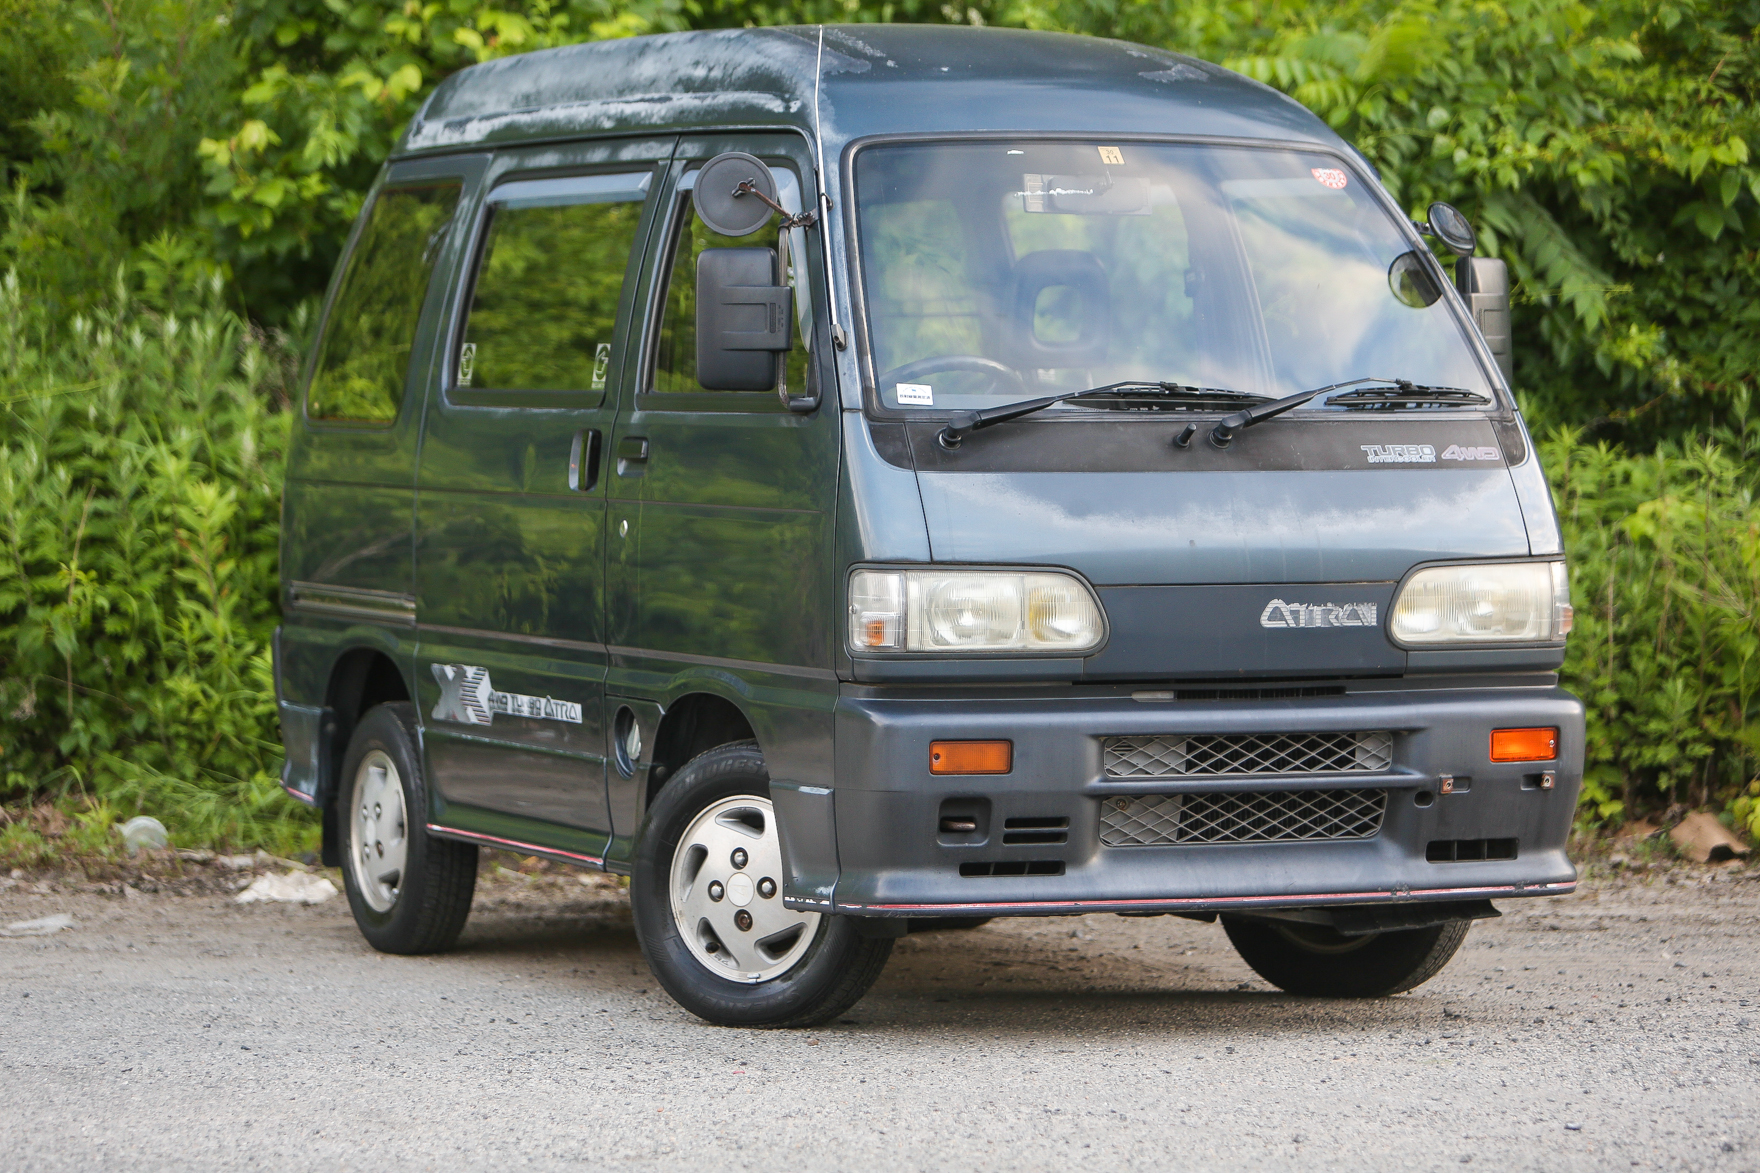 1990 Daihatsu Atrai Turbo - $8,950